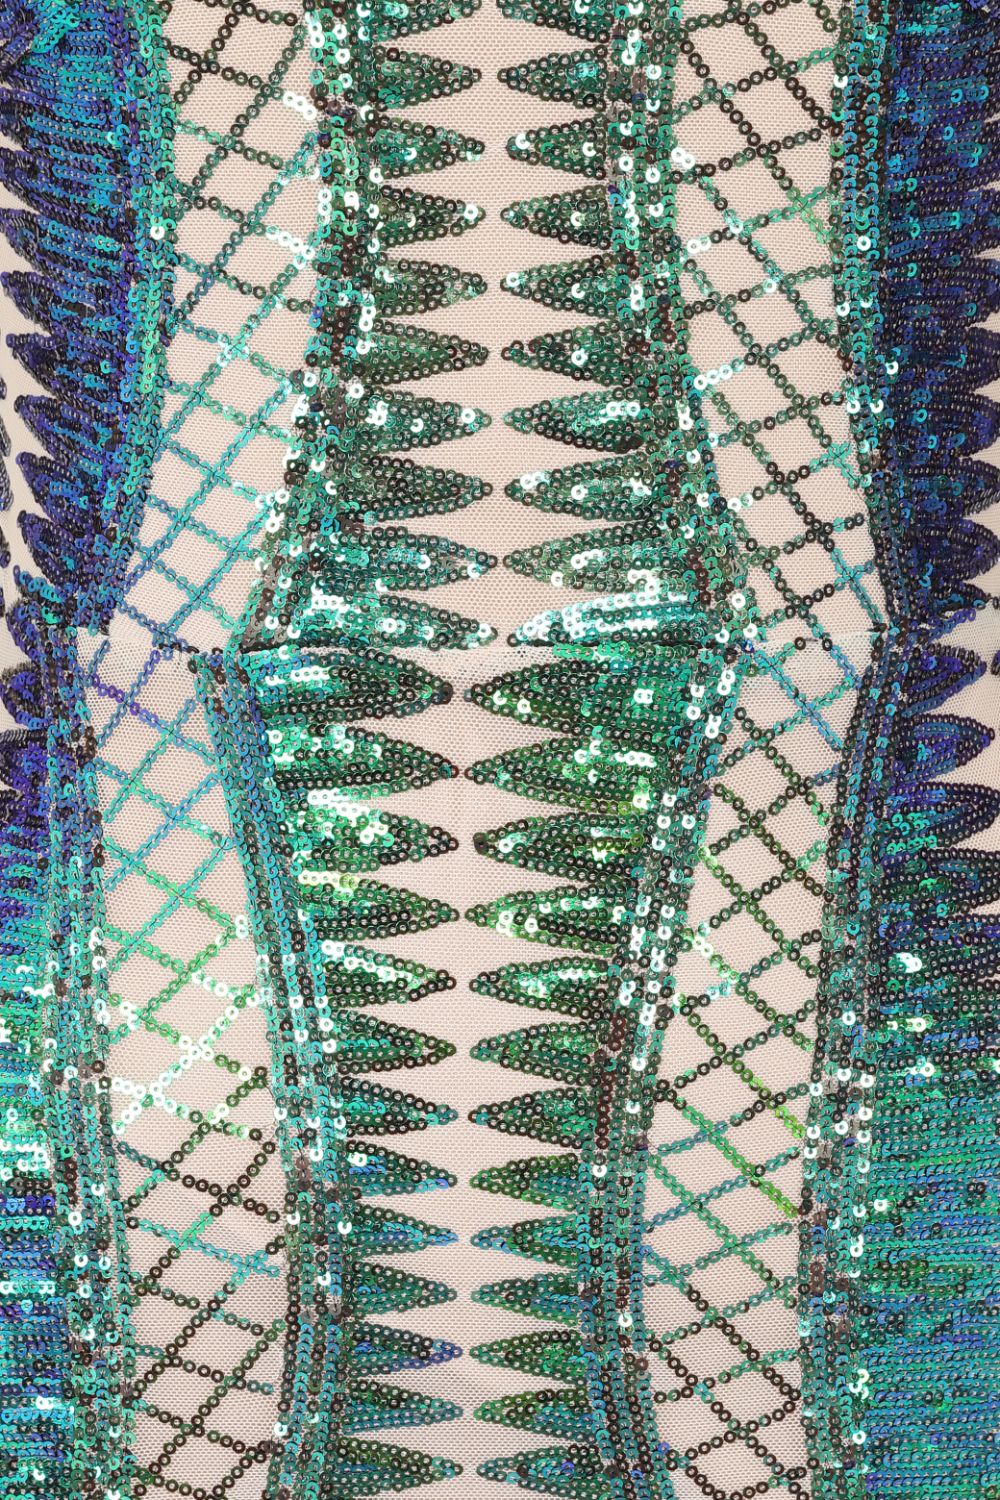 Twilight Green Nude Sequin Bandage Cage Bodycon Maxi Mermaid Dress